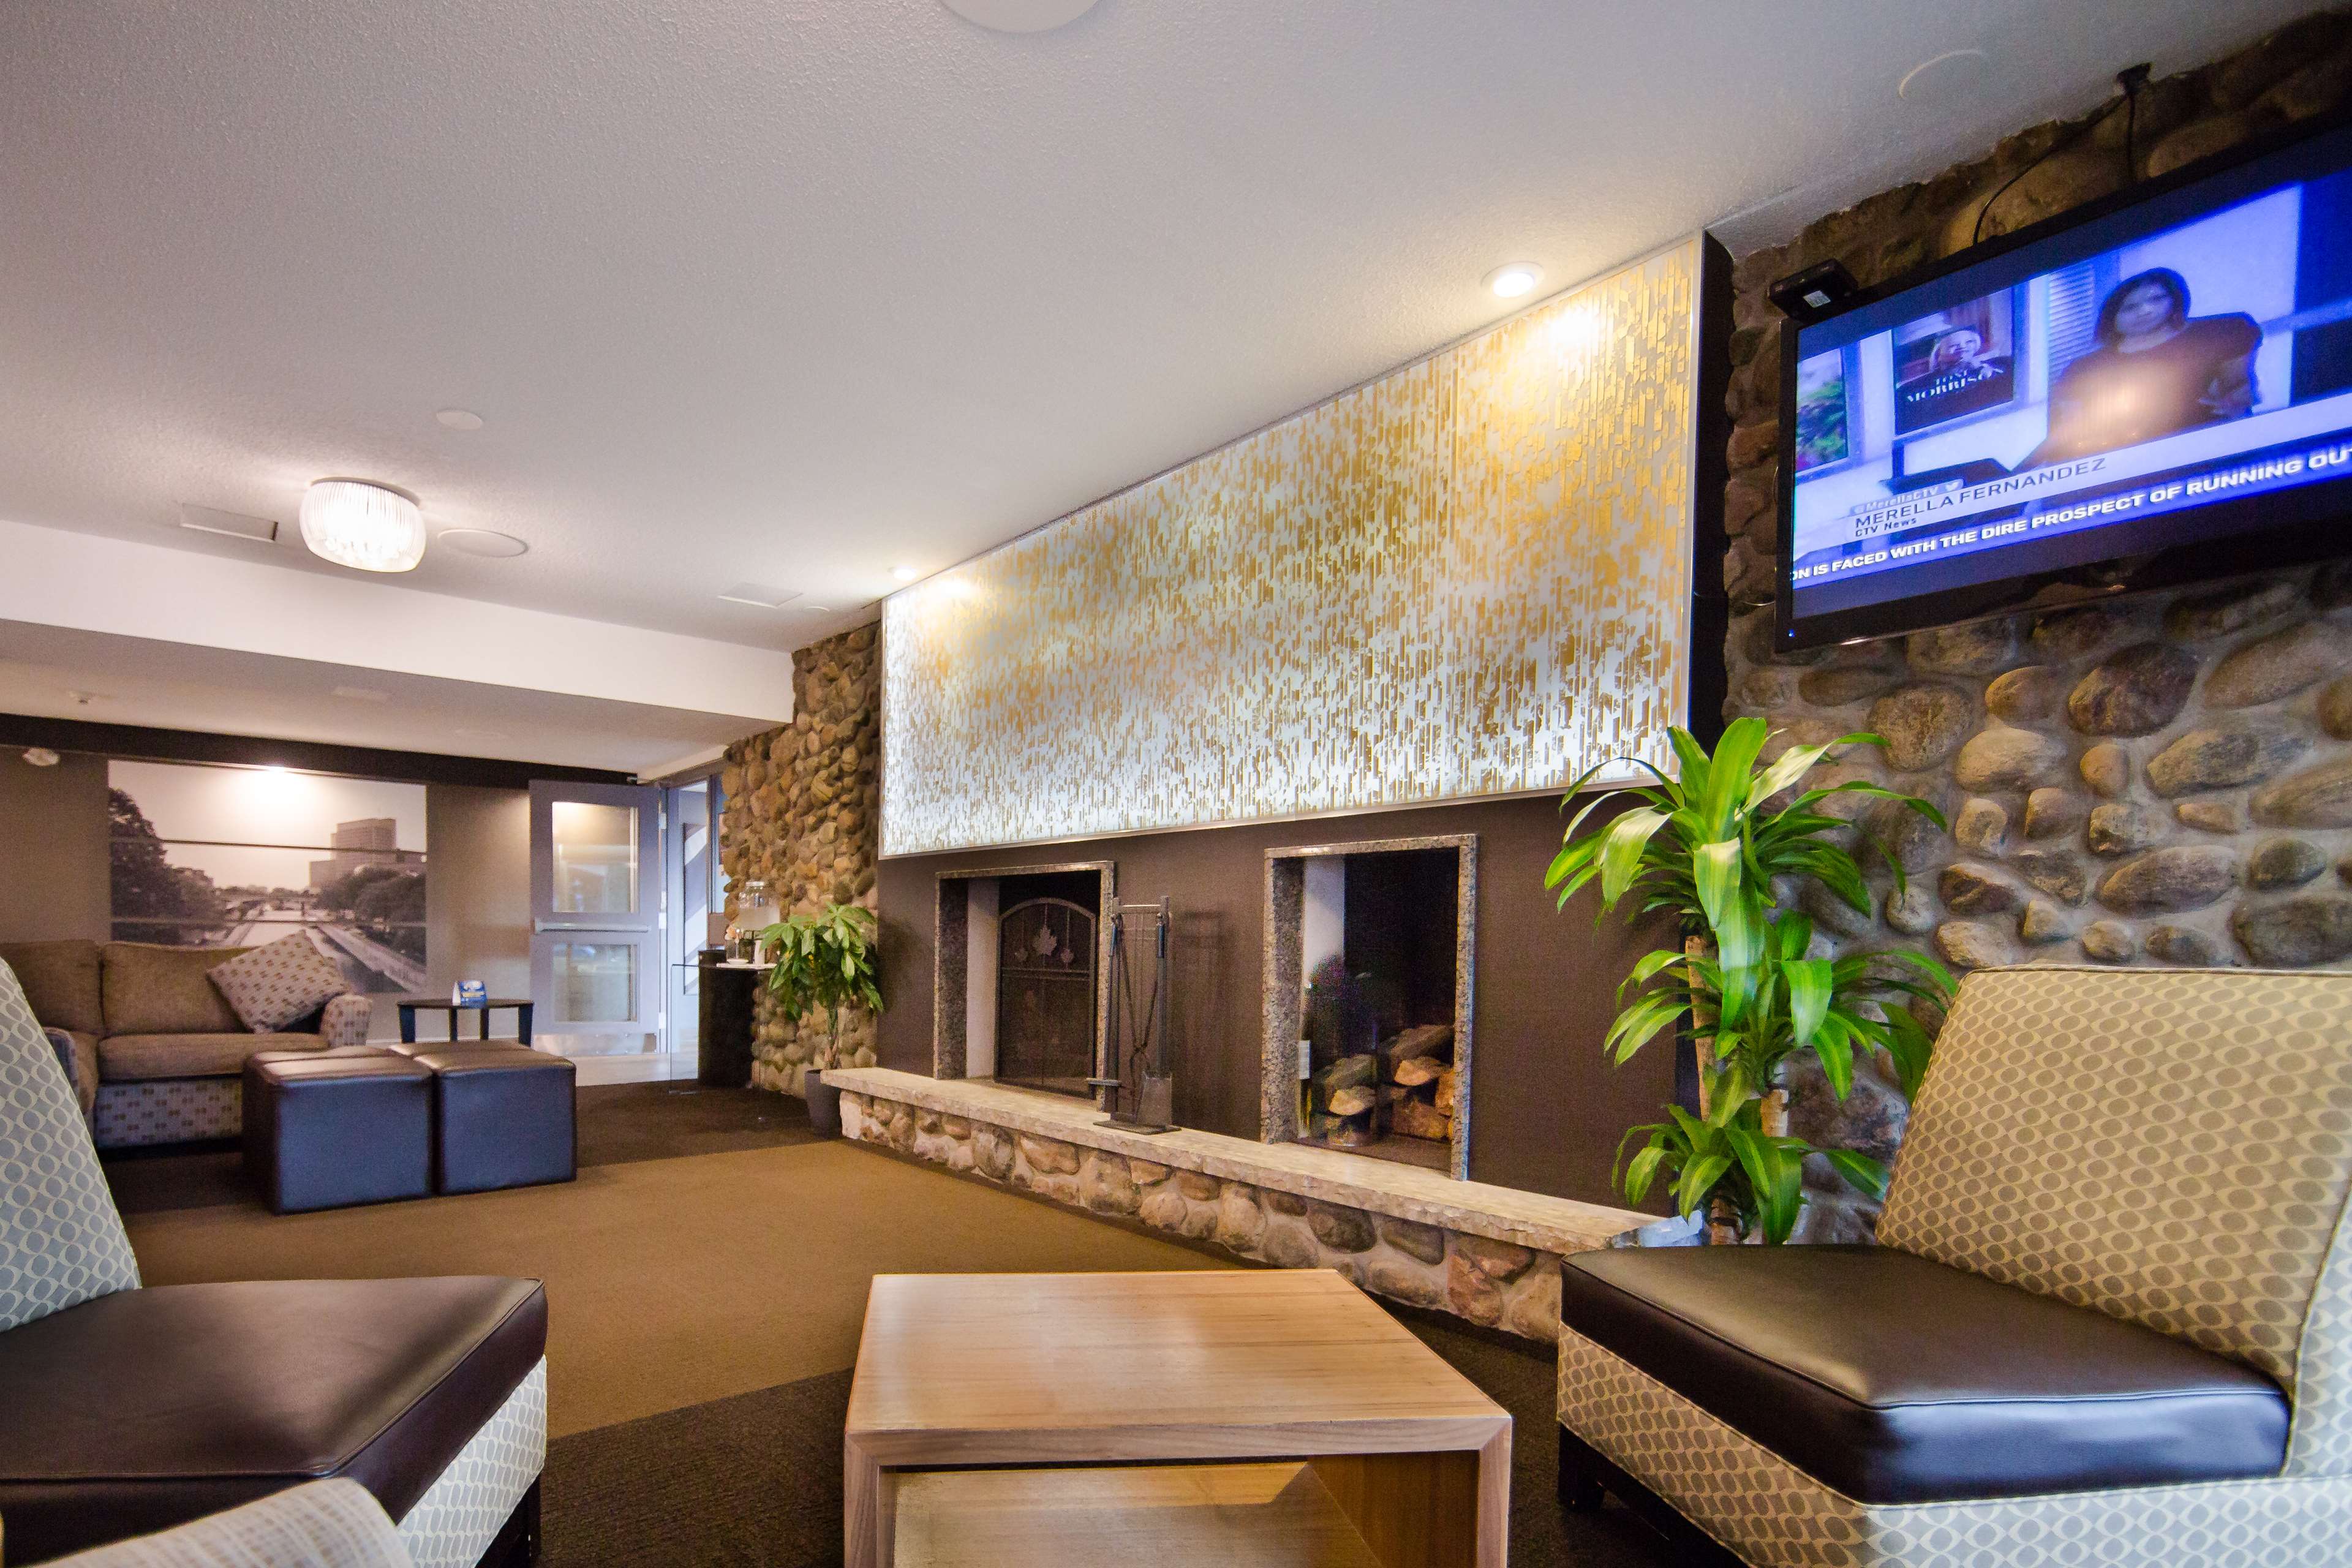 Lobby Best Western Plus Ottawa Kanata Hotel & Conference Centre Ottawa (613)828-2741